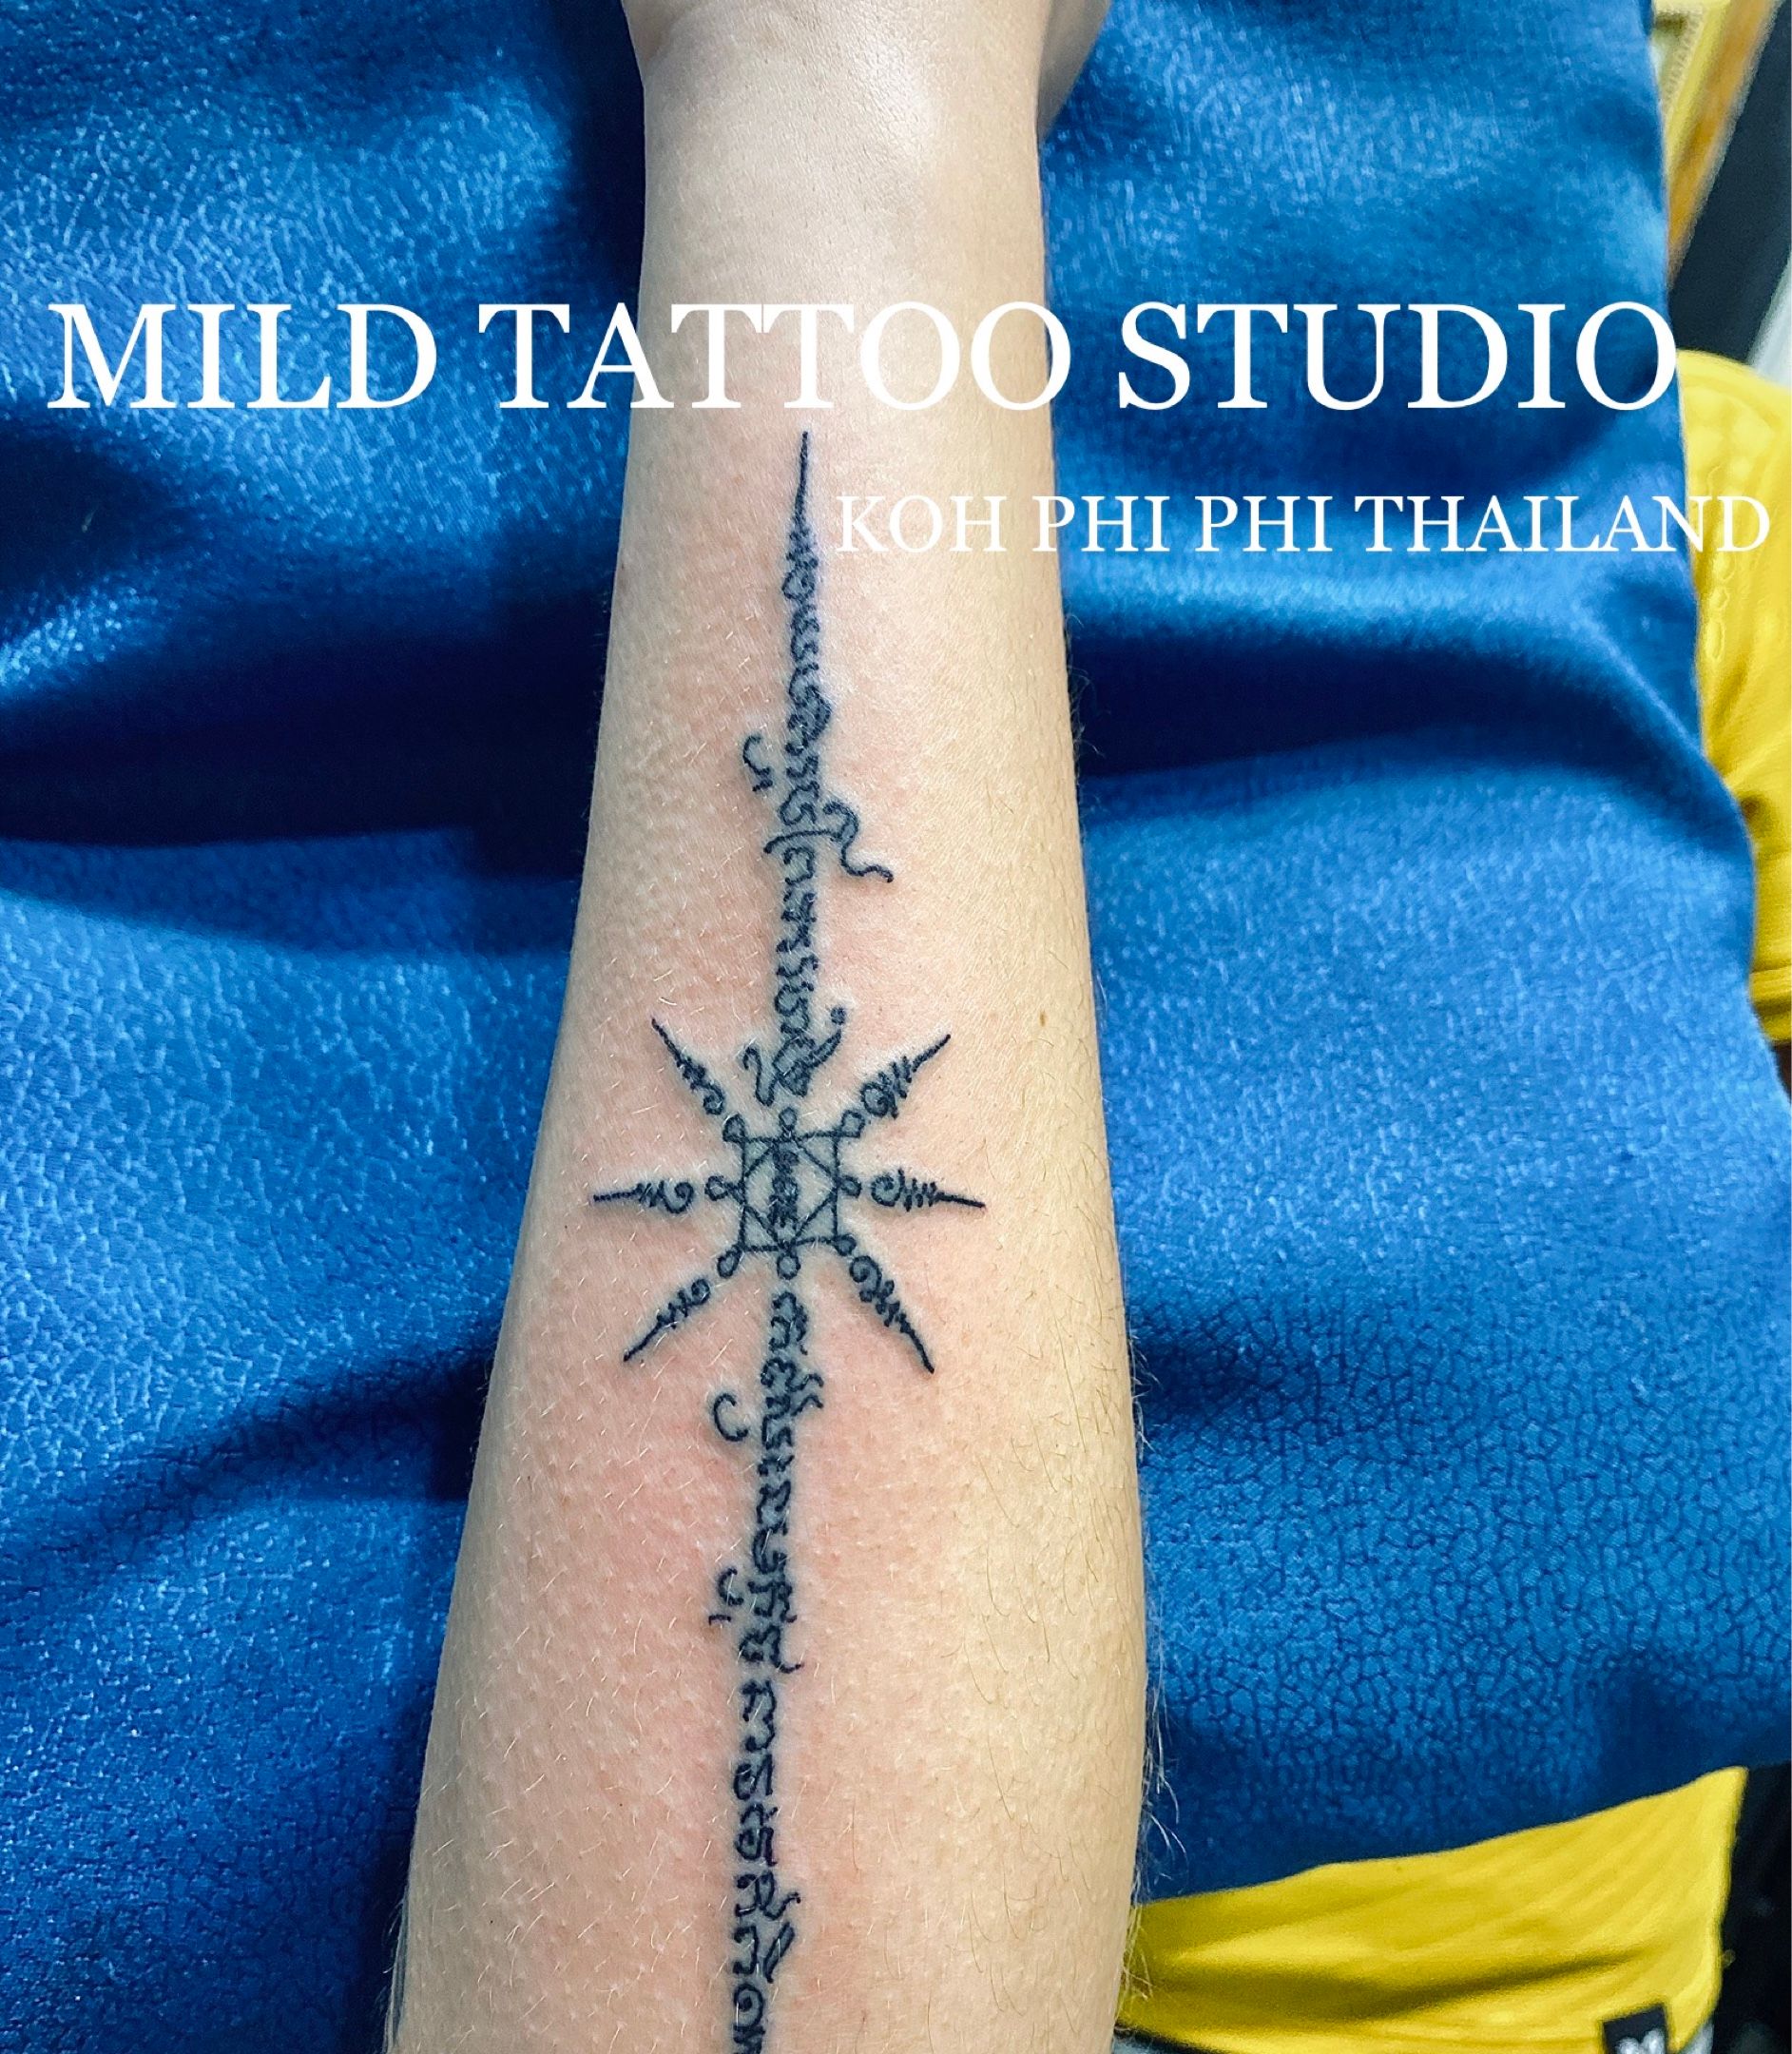 Cassowary Tattoo by chrisboehler on DeviantArt